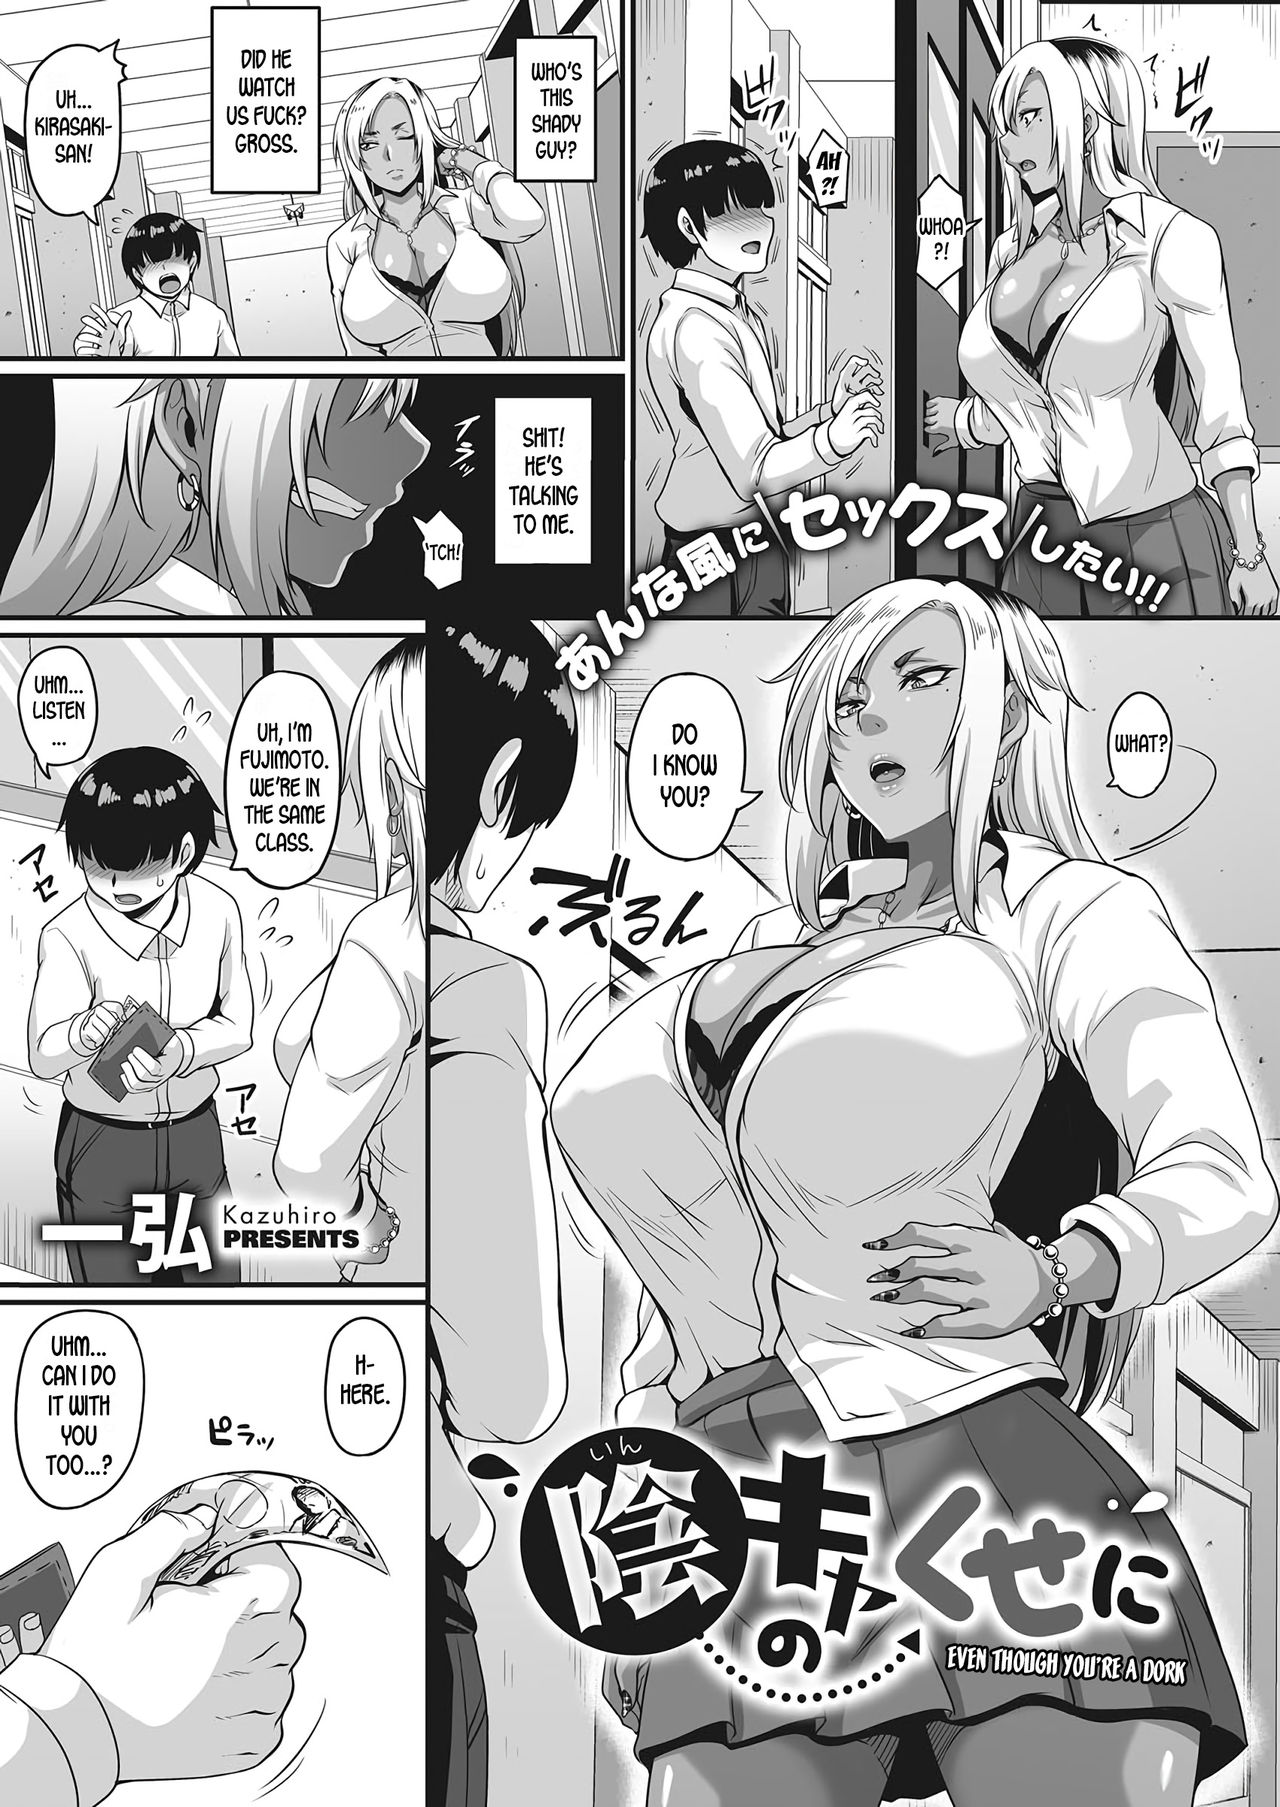 Kazuhiro porn comic